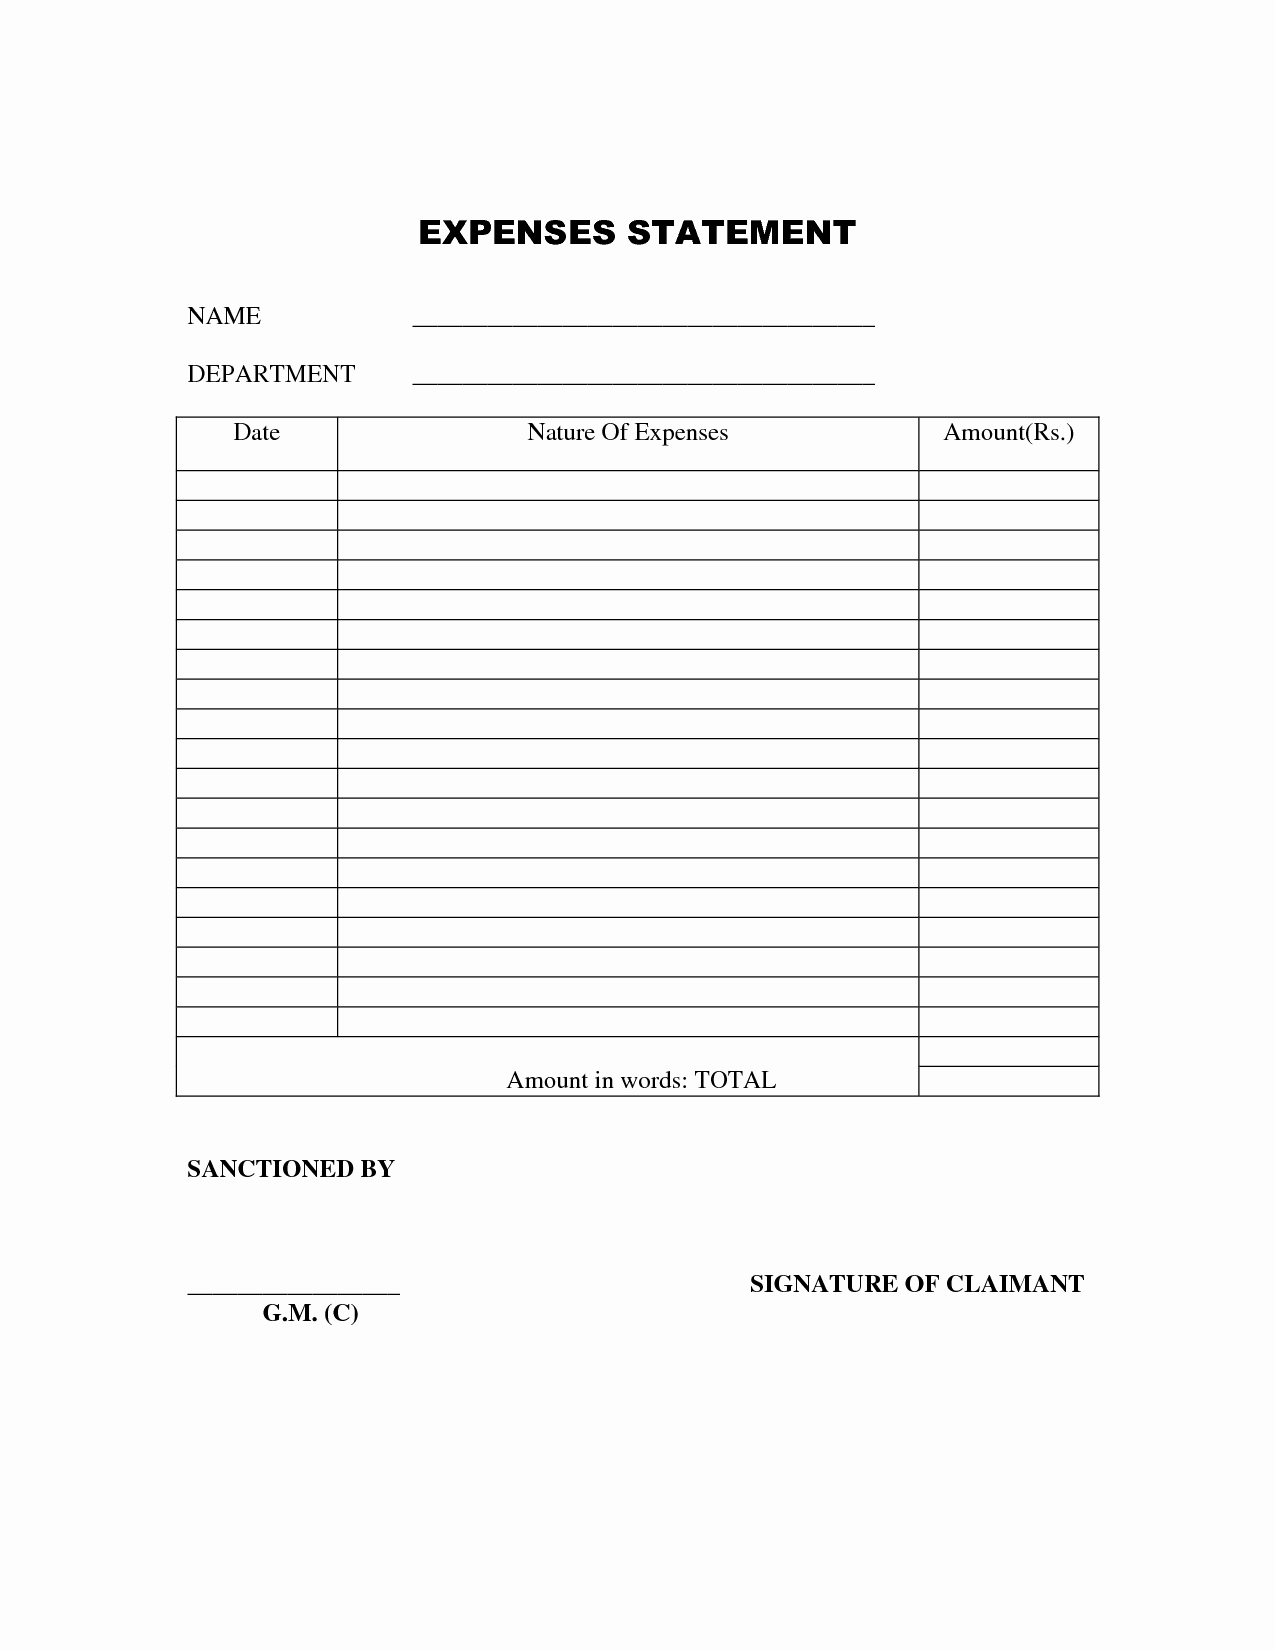 Basic Expense Report Template New Basic Expense Report Template Portablegasgrillweber